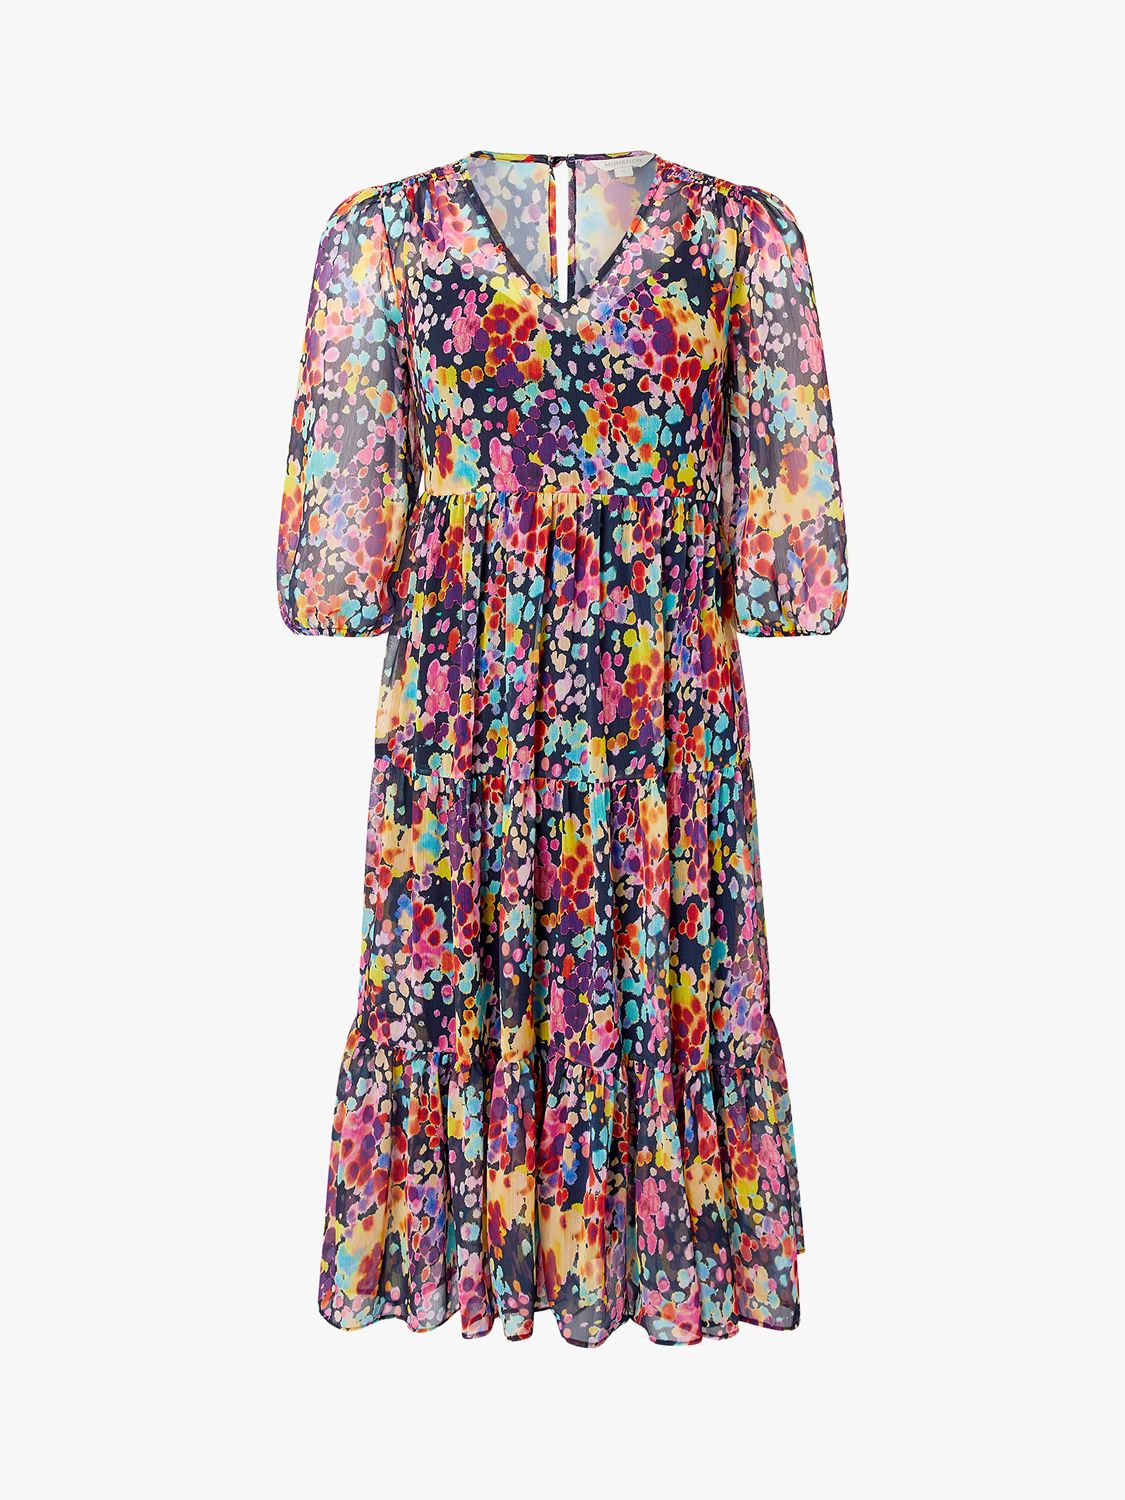 Monsoon Suvi Helen Floral Print Dress, Navy/Multi